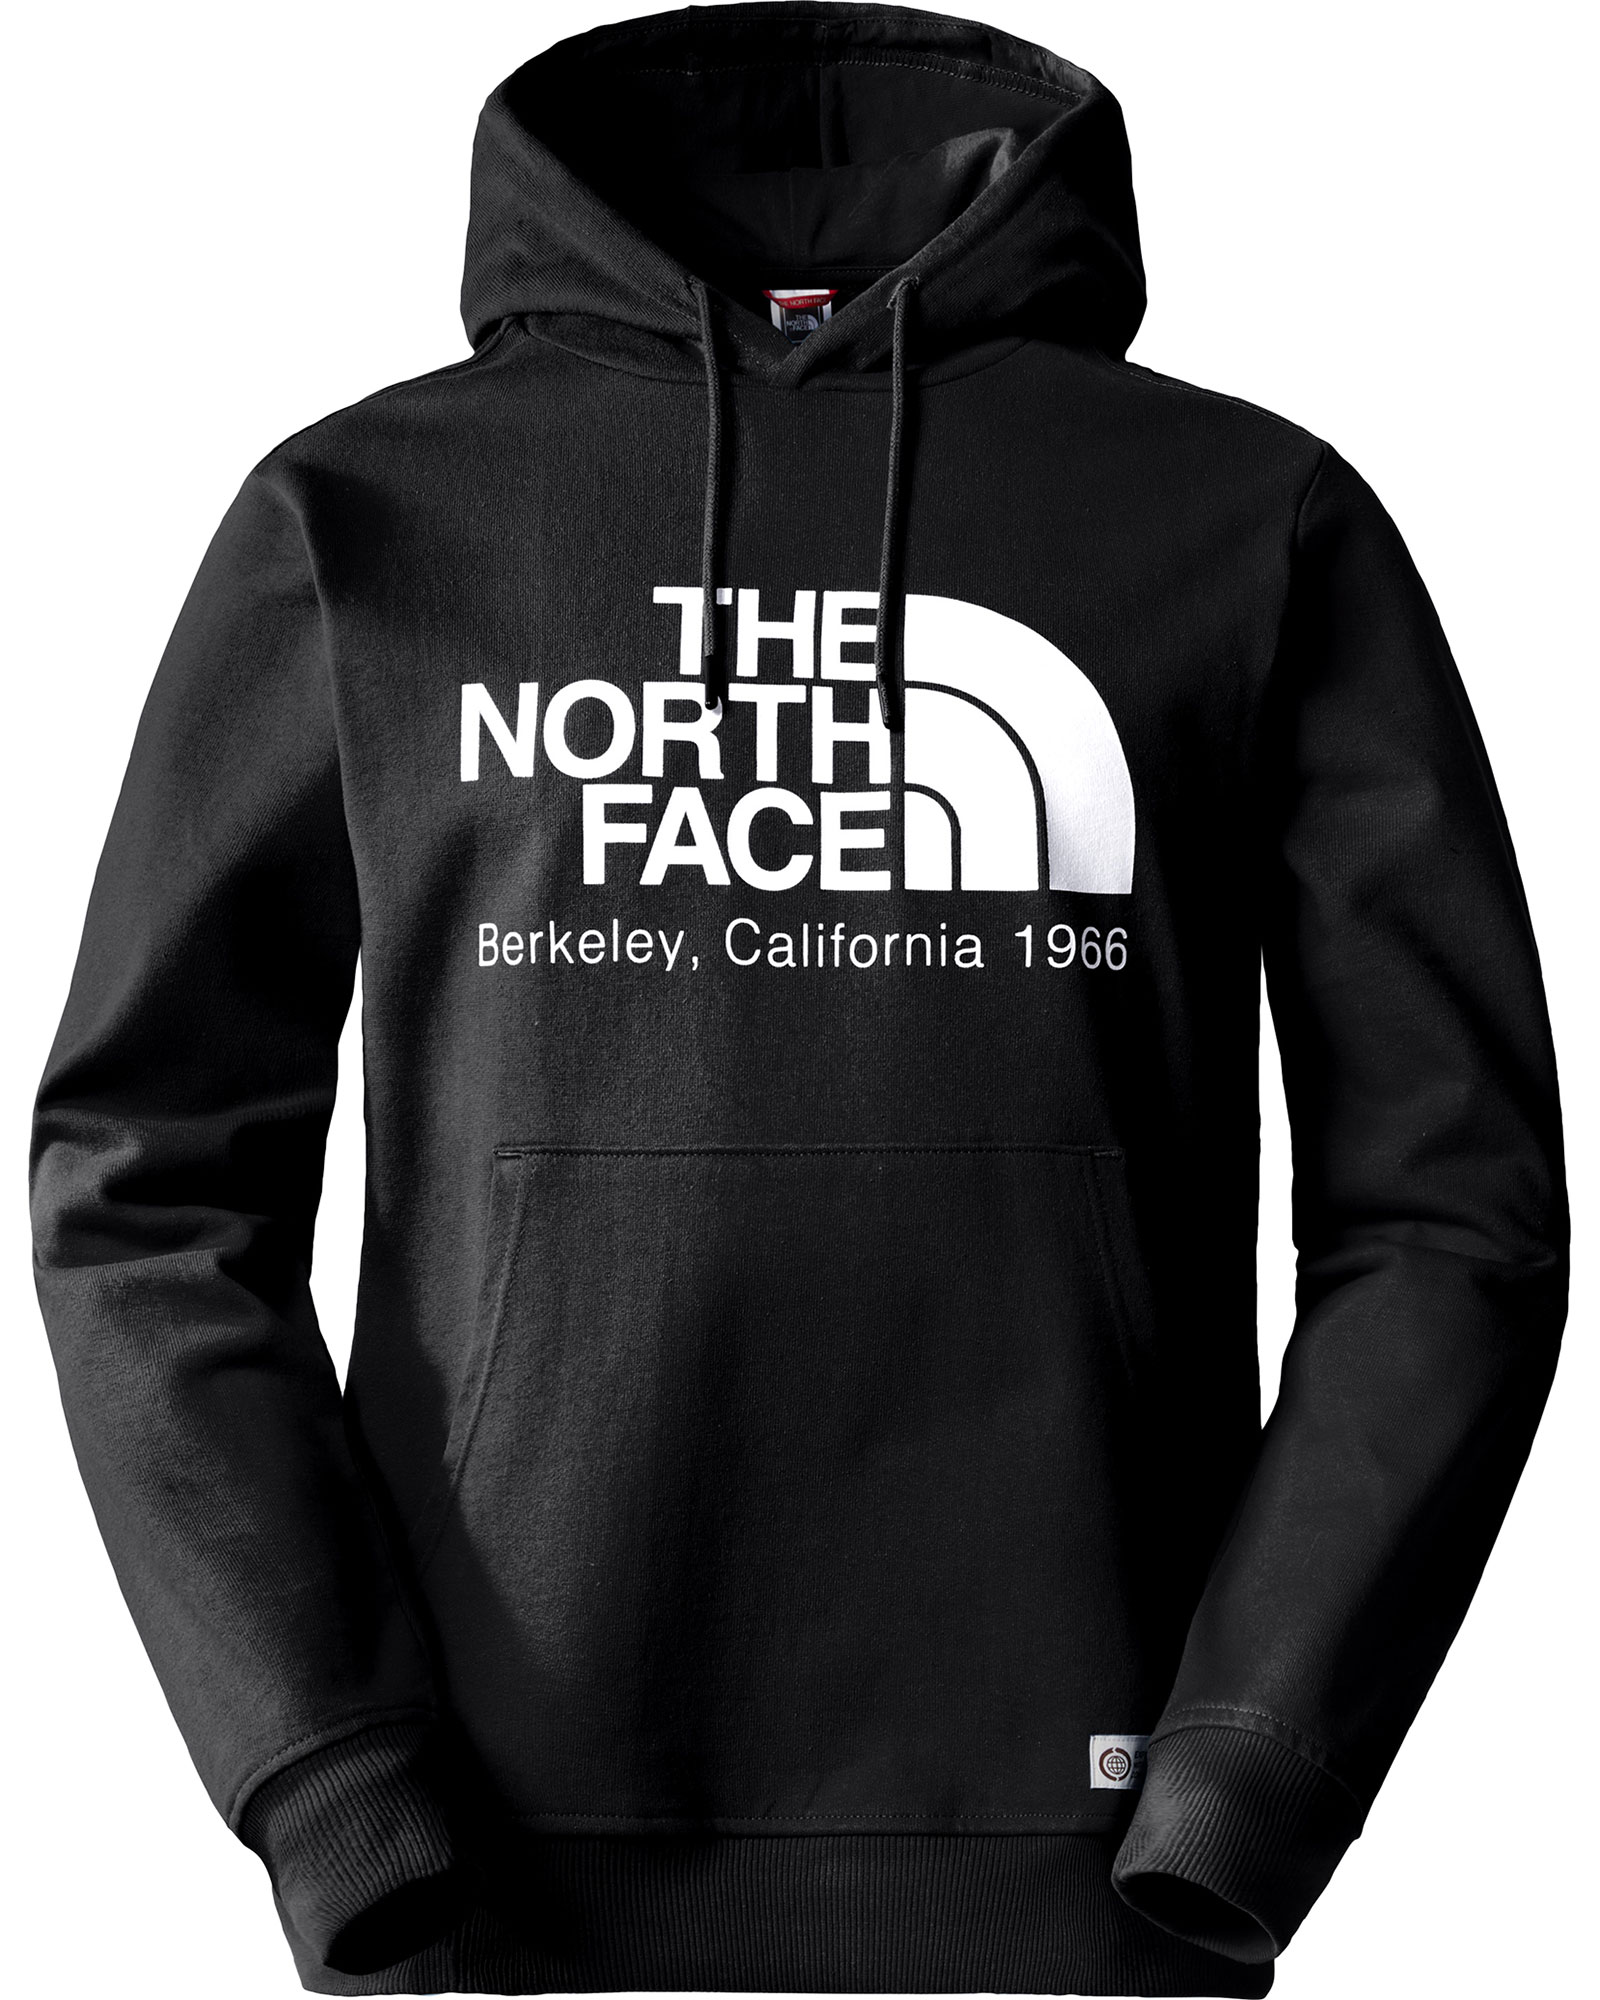 The North Face Mens Berkeley California Hoodie